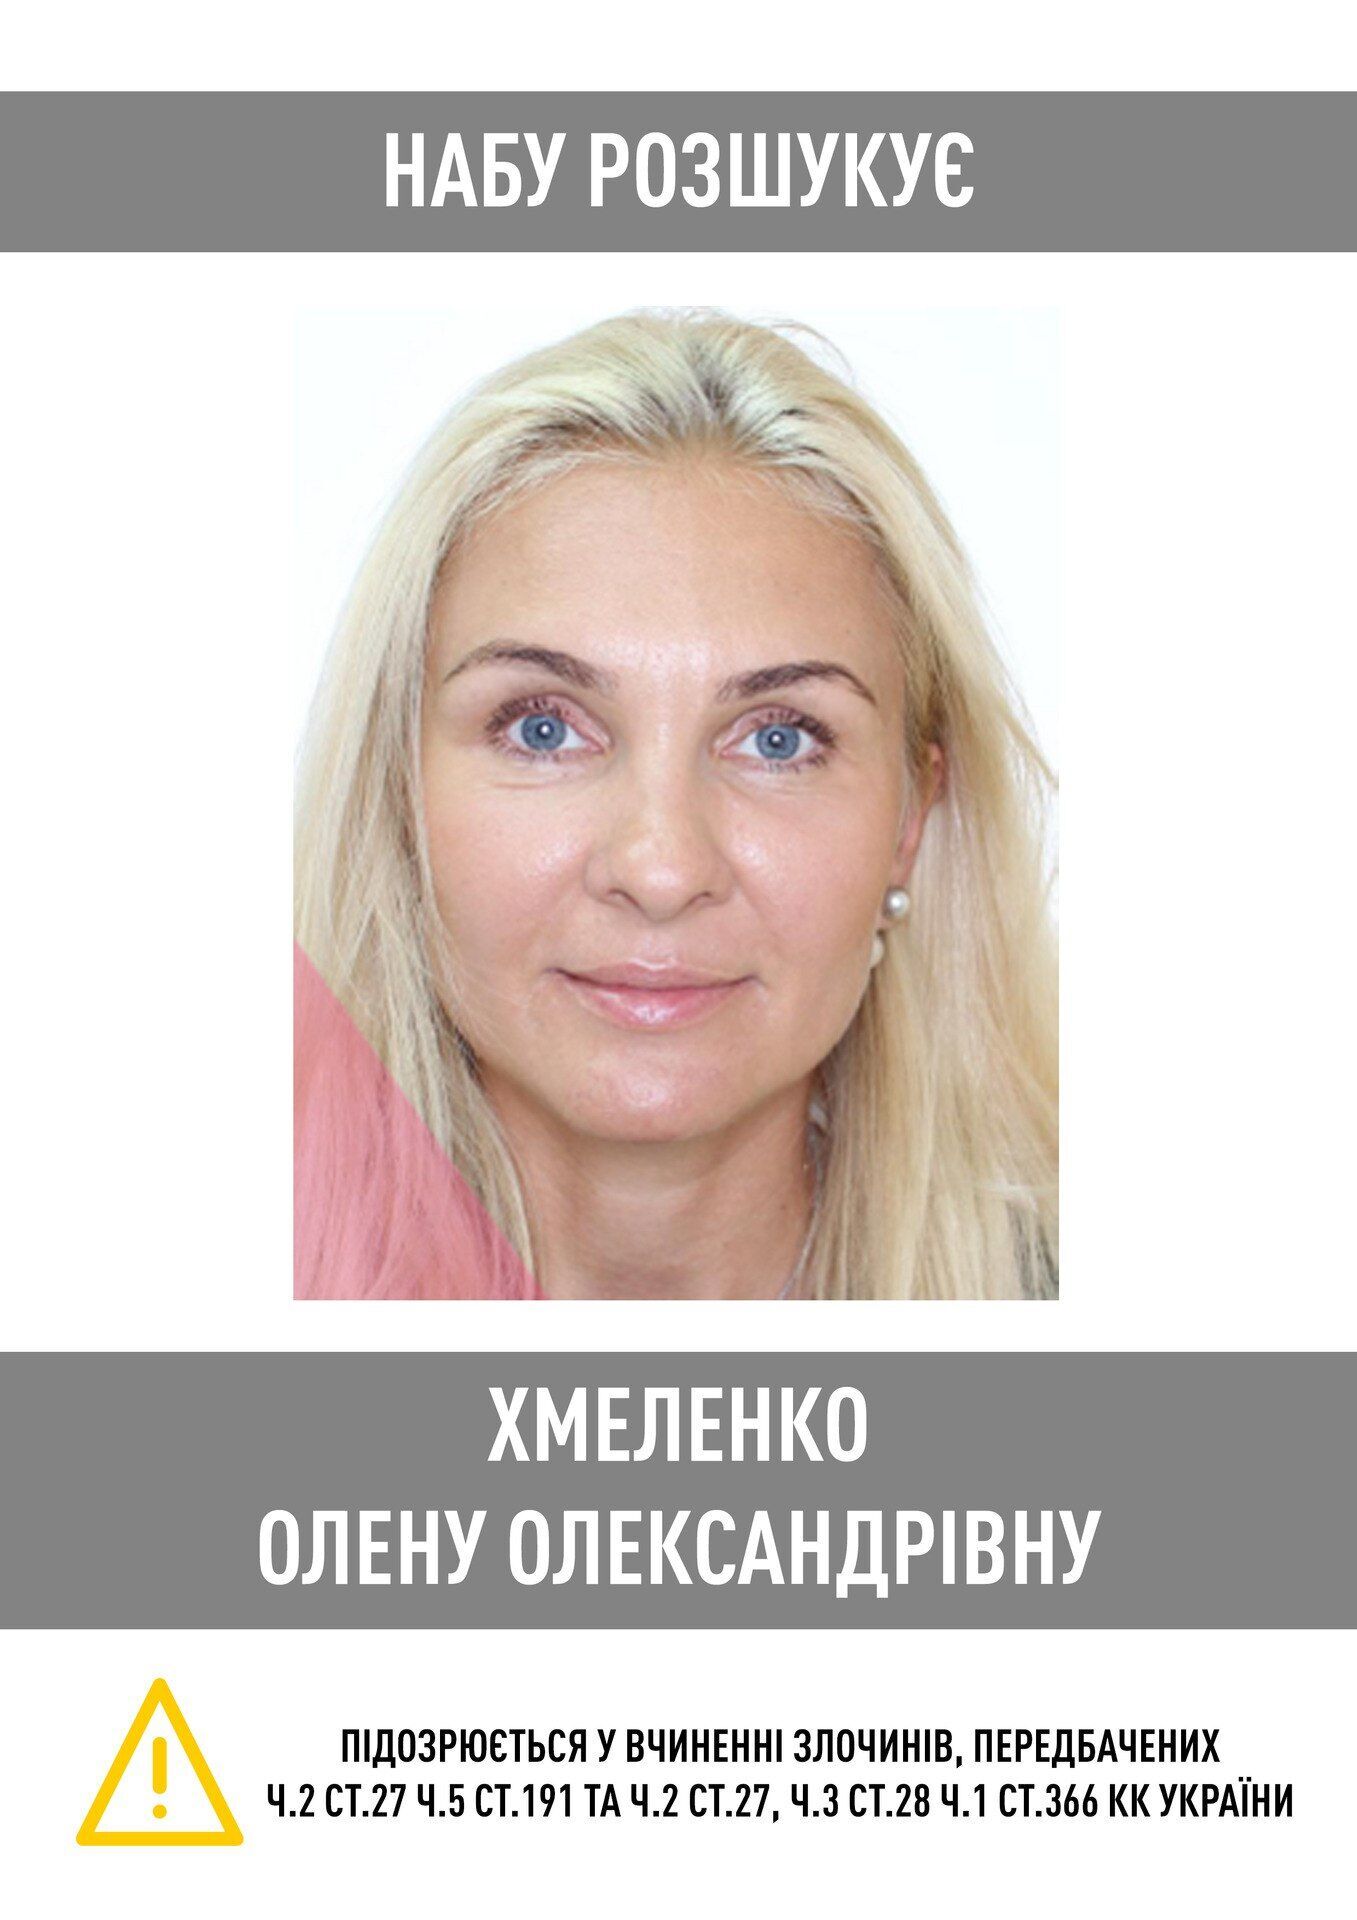 НАБУ объявило в розыск экс-председателя Нацбанка Кирилла Шевченко: в чем обвиняют